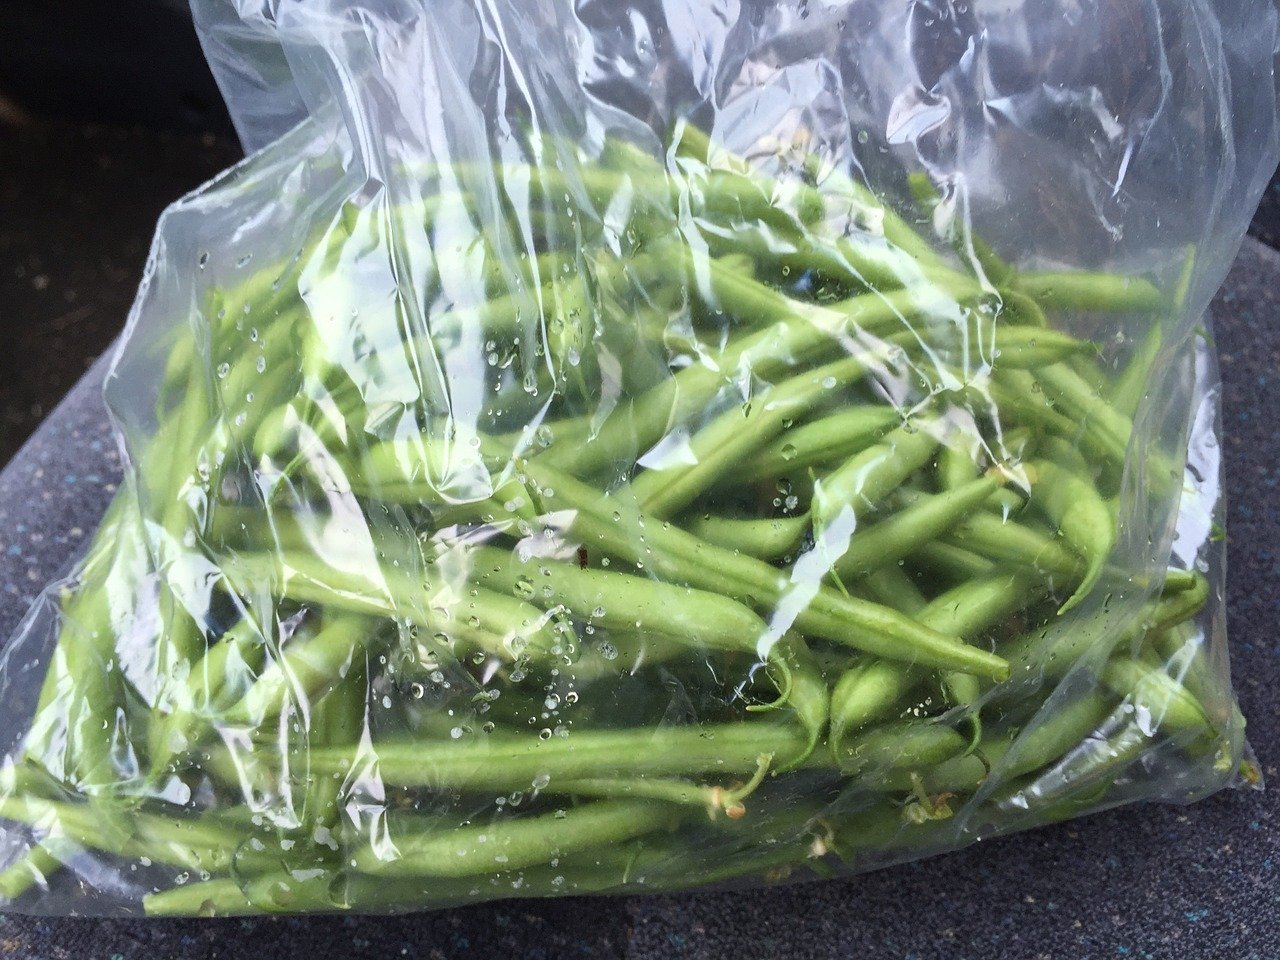 Green beans inside a clear plastic bag